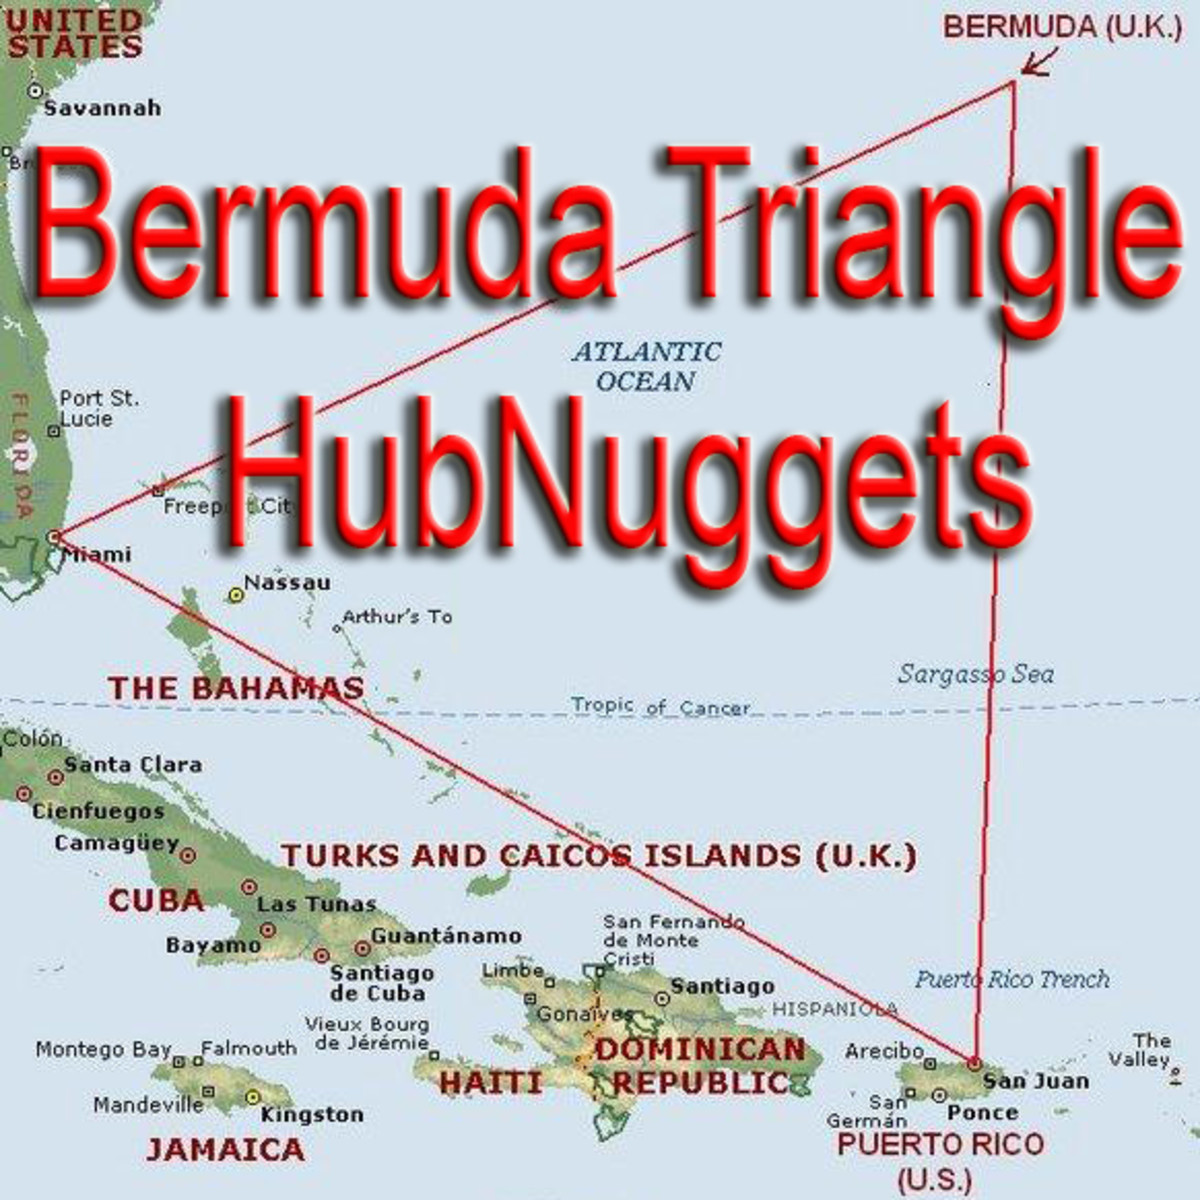 Lost in the Bermuda Triangle HubNuggets